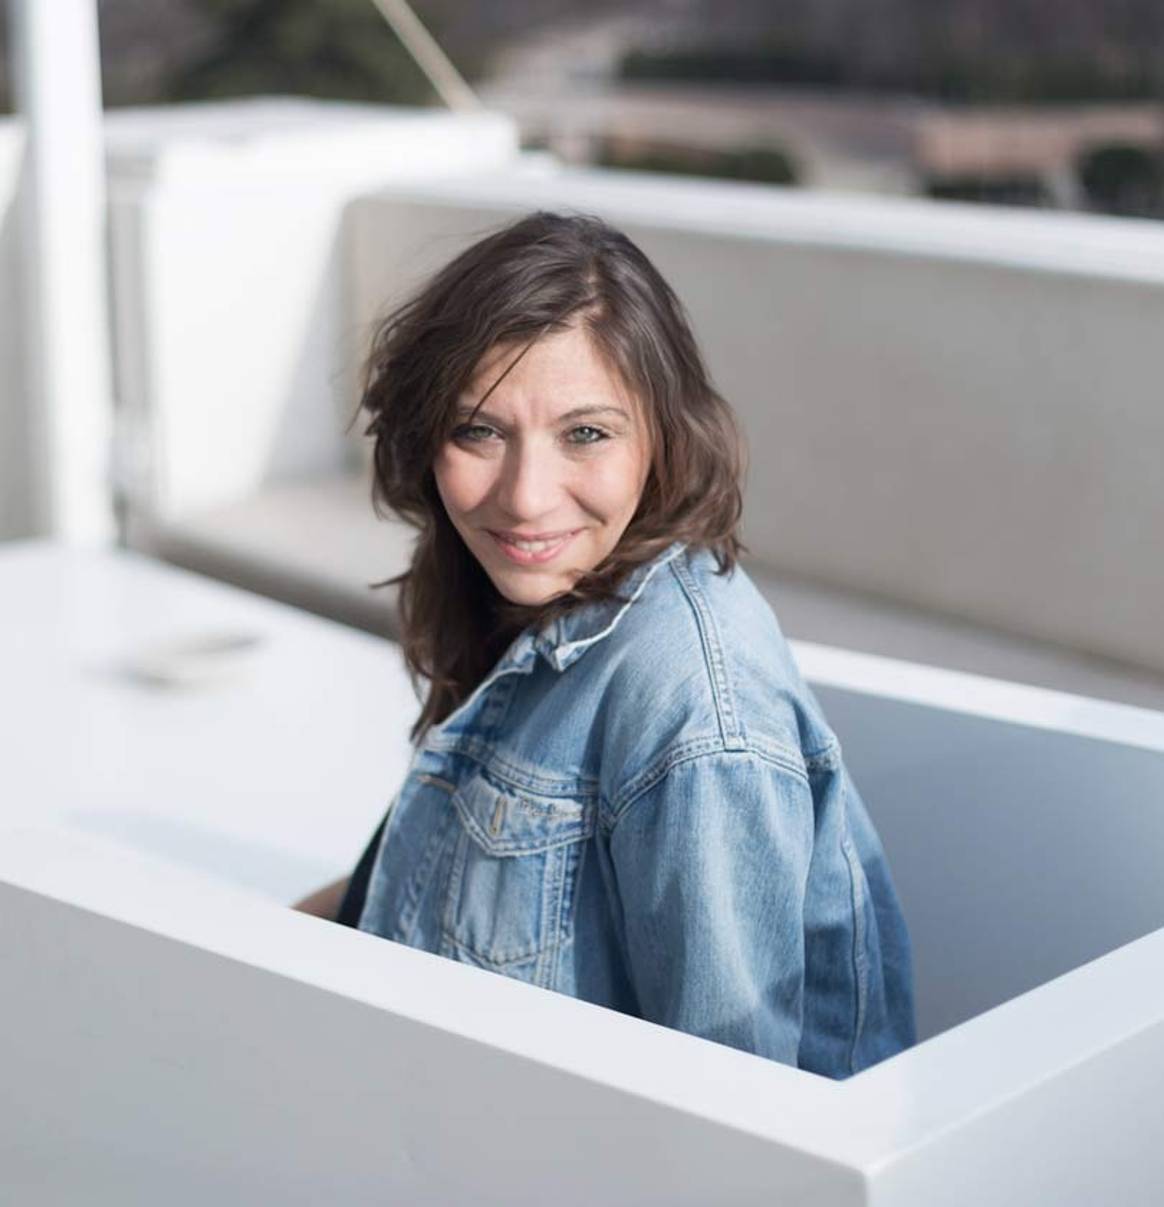 Entrevista: Fabiana Pilieci sobre su papel de Product Manager en Pepe Jeans